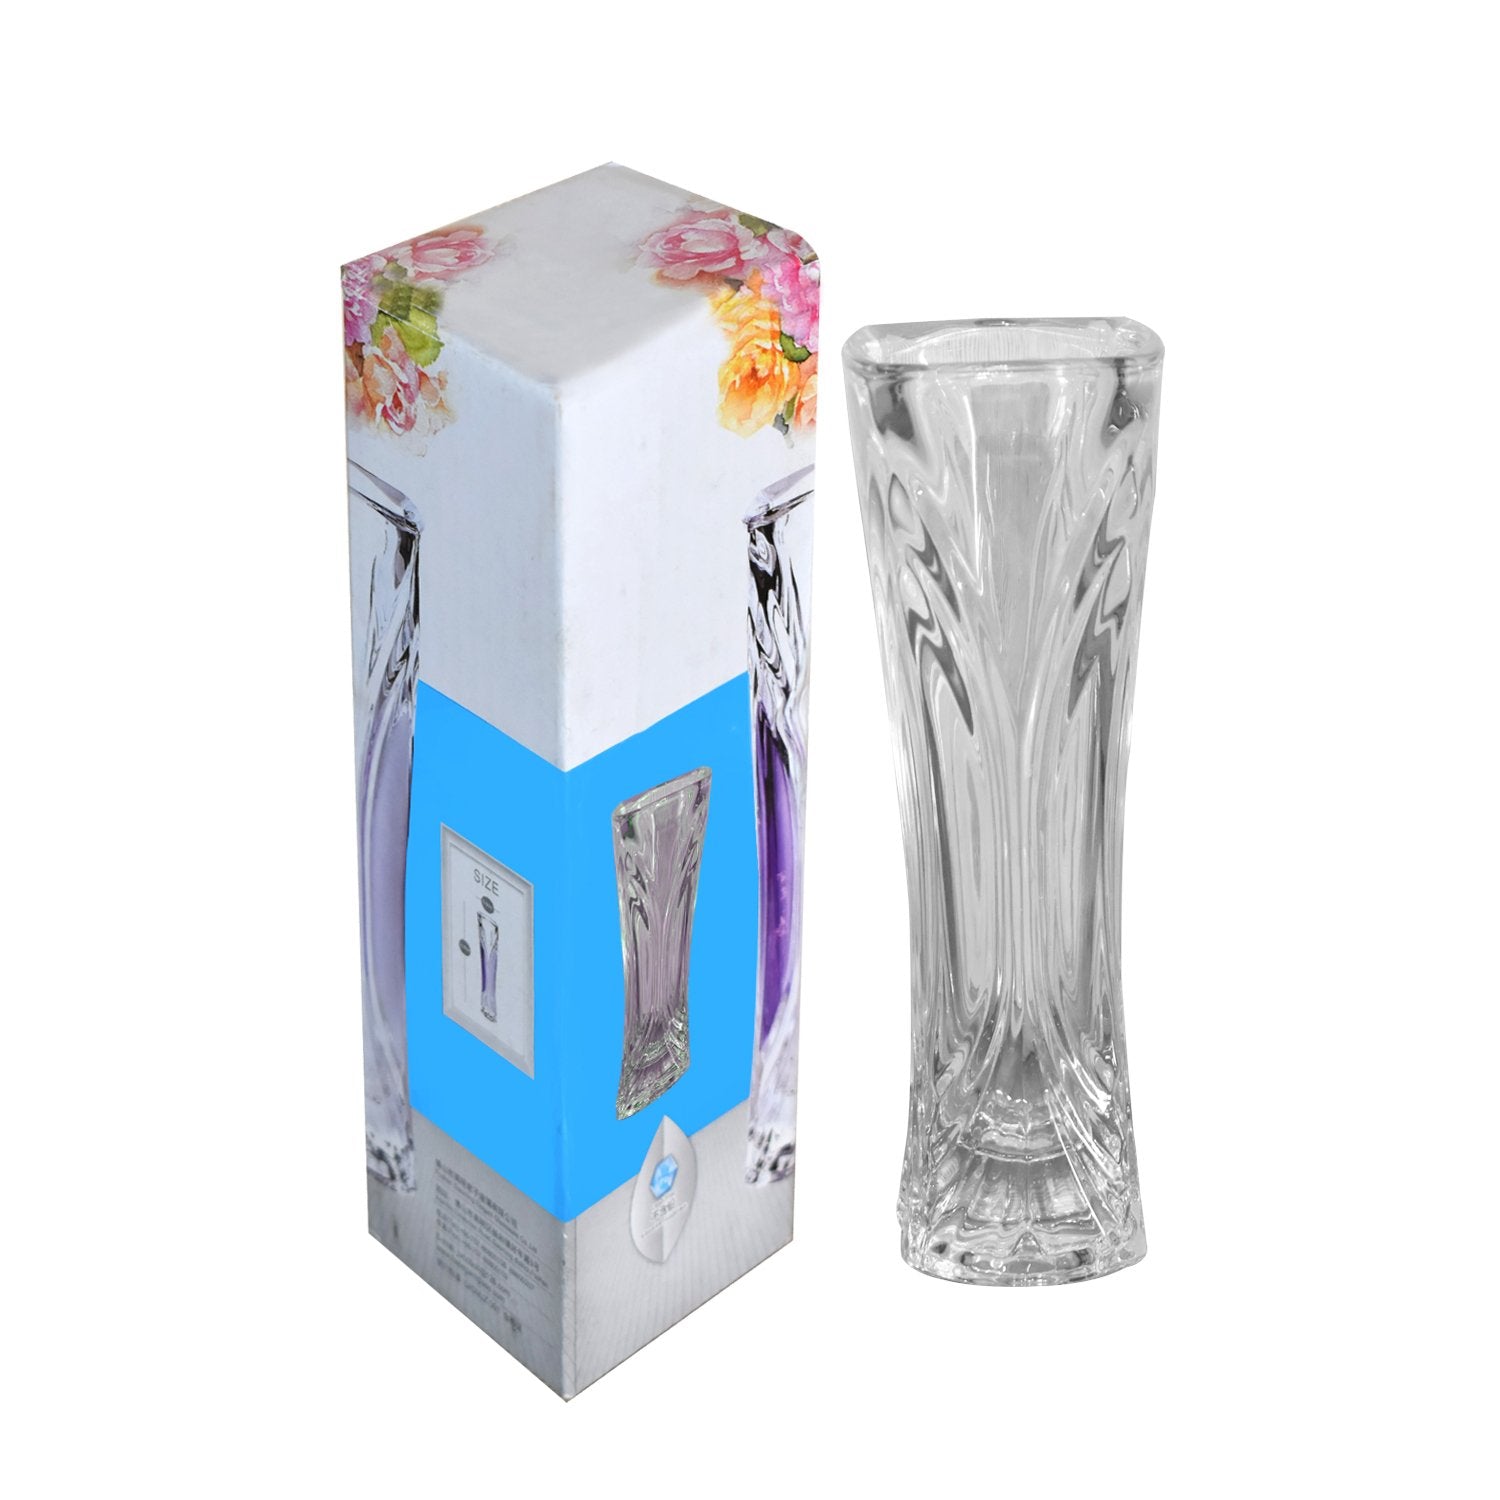 1851 Glass Flower Pot, Crystal Clear Vase for Living - SkyShopy